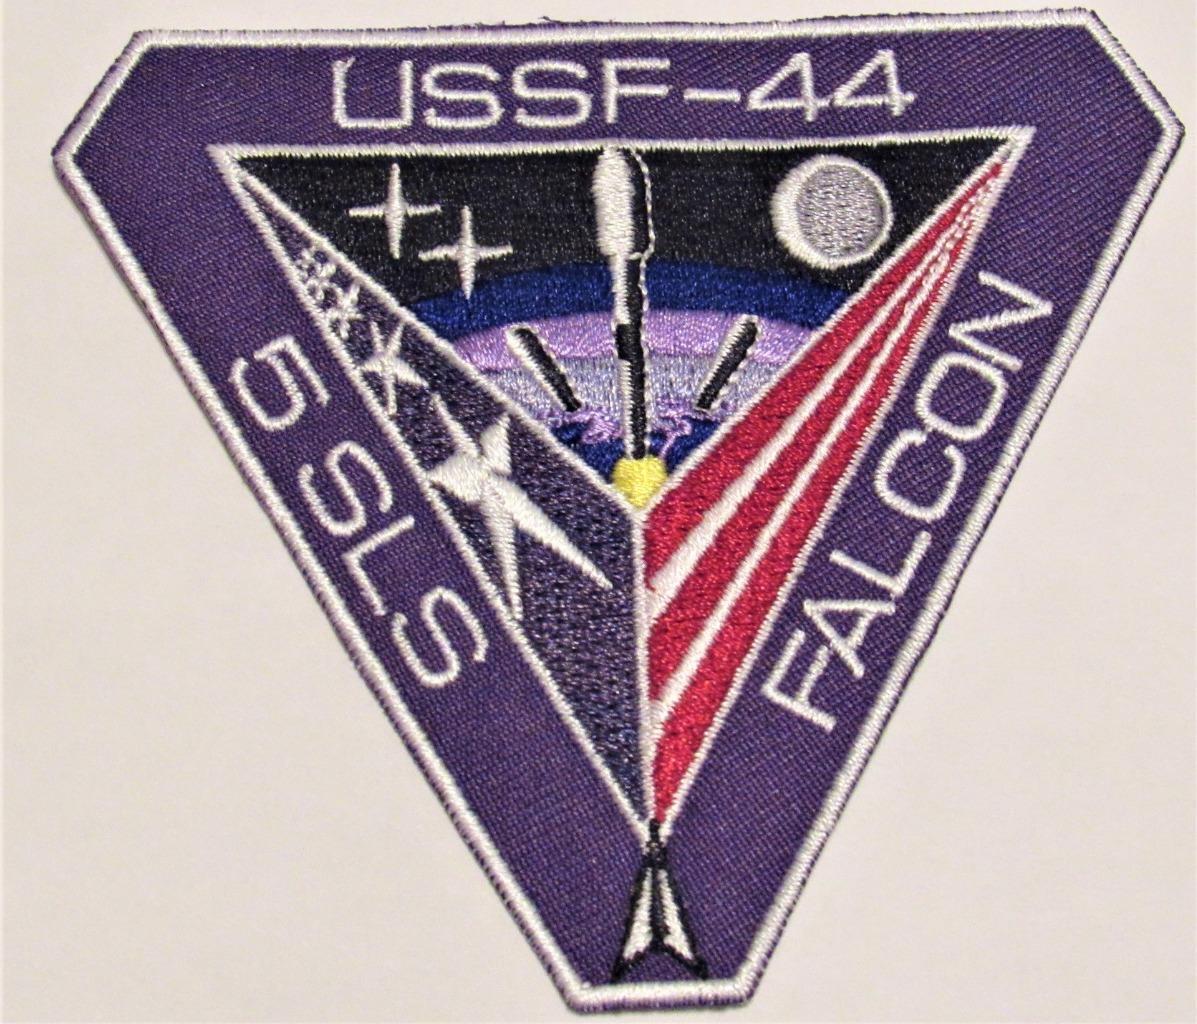 FALCON HEAVY 5 SLS USSF-44 ORIGINAL SPACE MISSION PATCH - CAPE LAUNCH TEAM